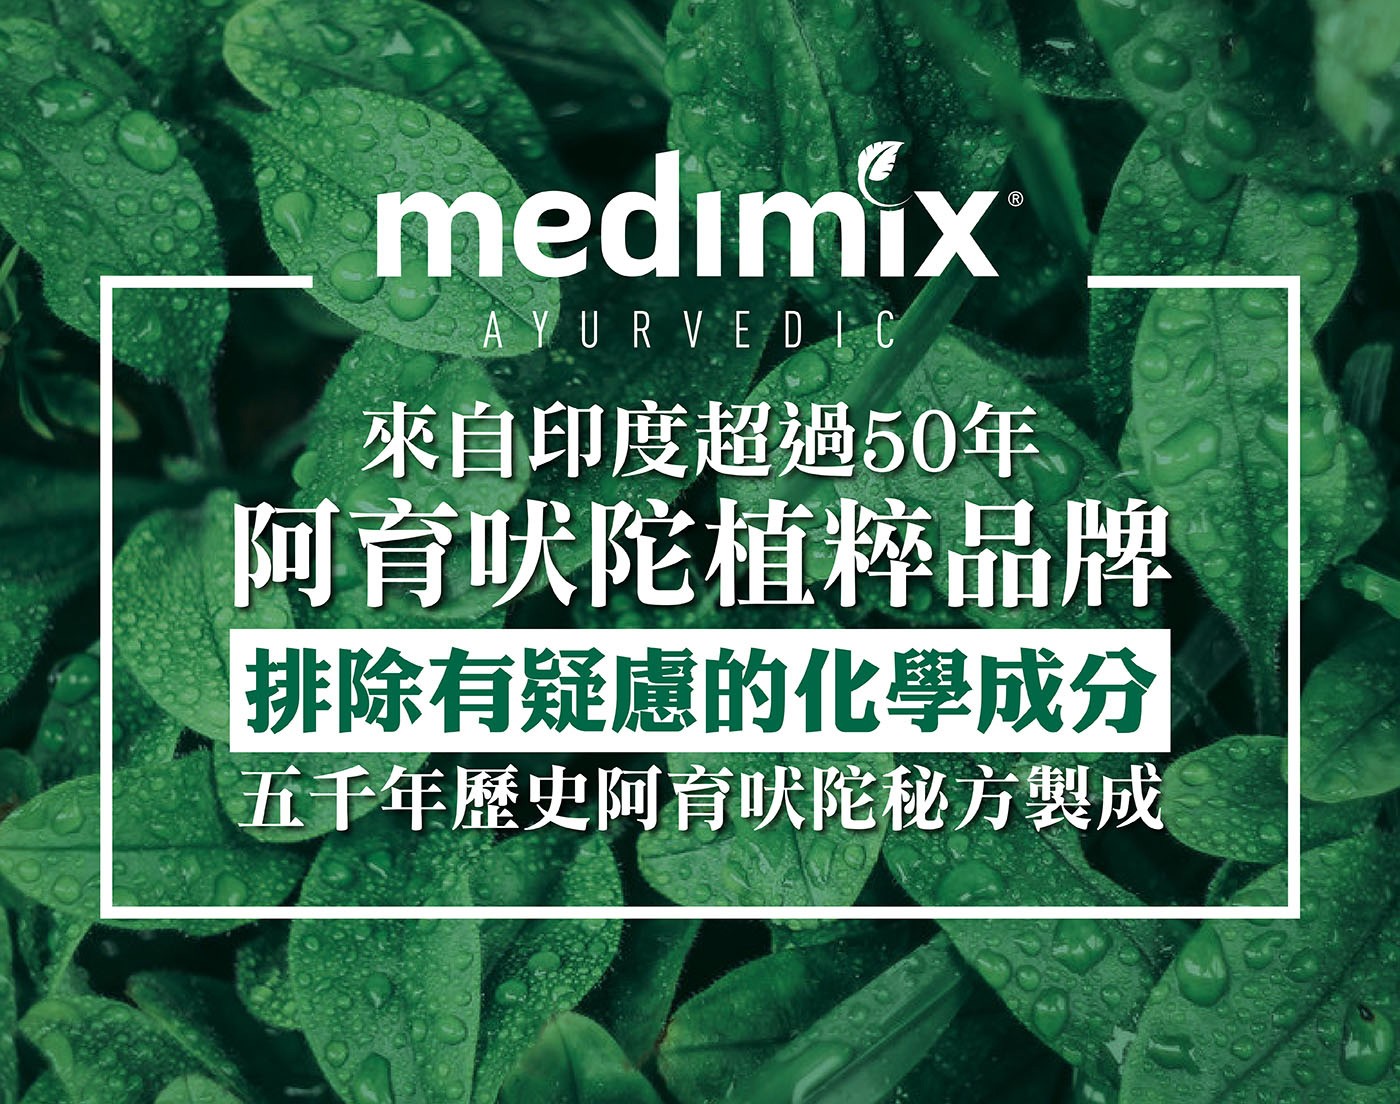 Medimix 印度綠寶石皇室藥草浴美肌皂 200公克 X 64入來自印度超過50年阿育吠陀植粹品牌排除有疑慮的化學成分五千年歷史秘方製成